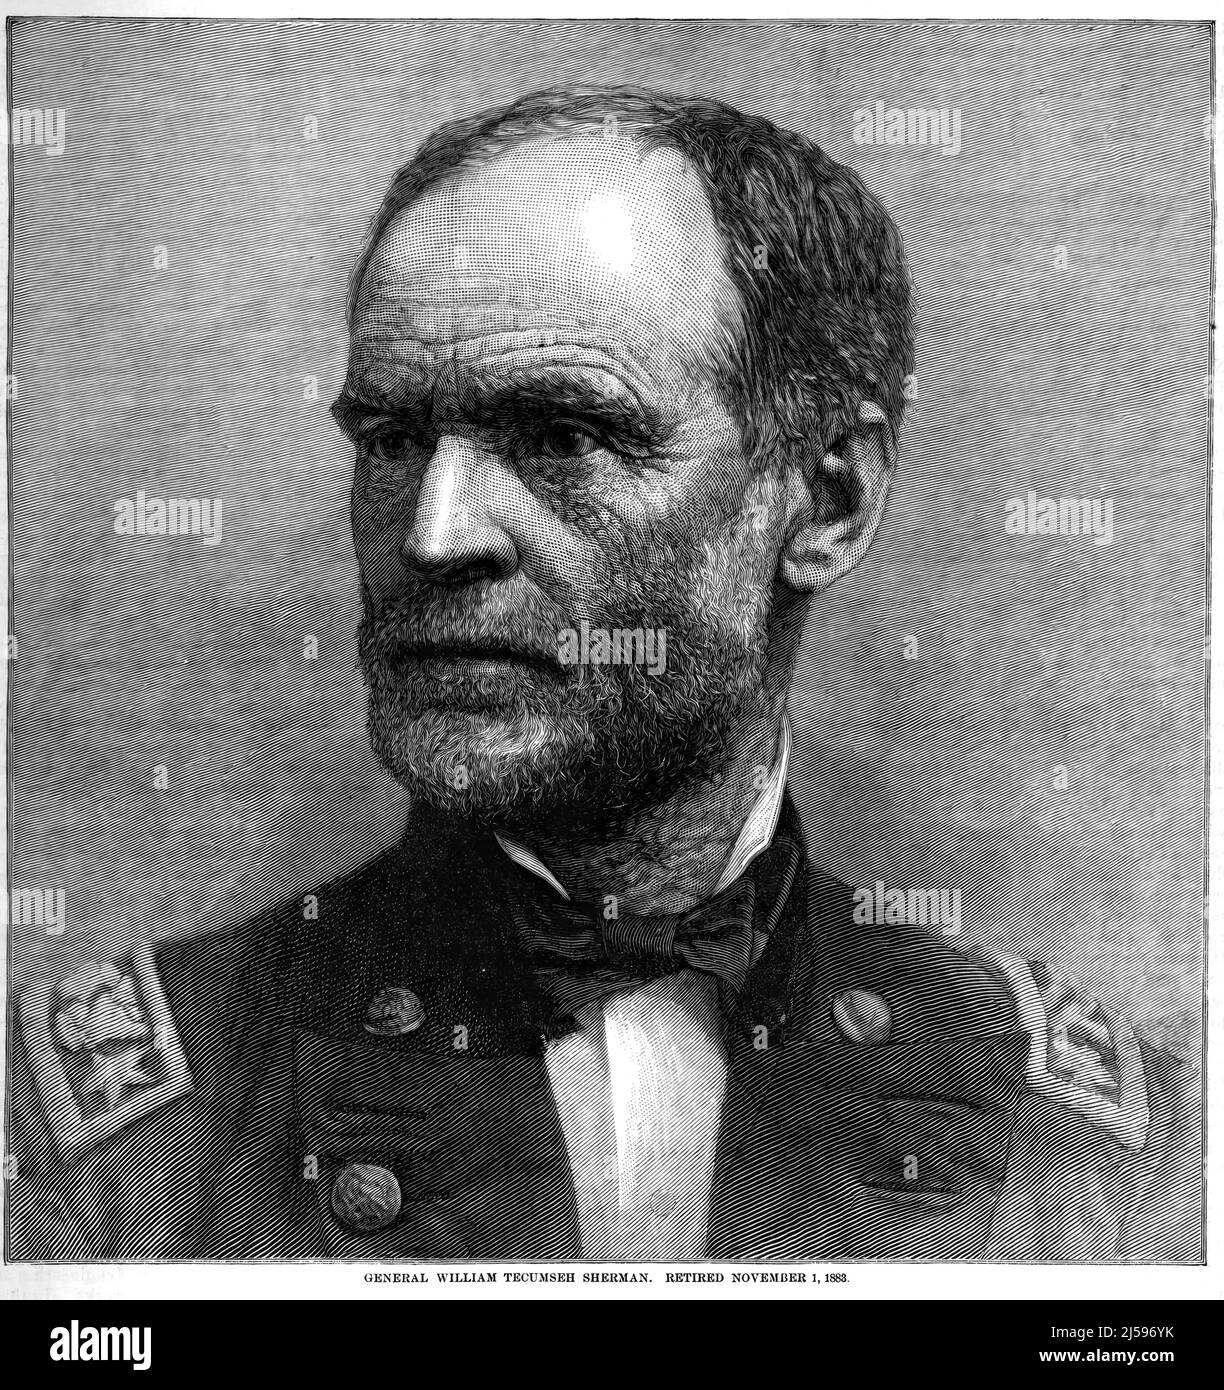 Portrait of William Tecumseh Sherman, Union Army General in the American Civi War. 19th century illustration Stock Photo